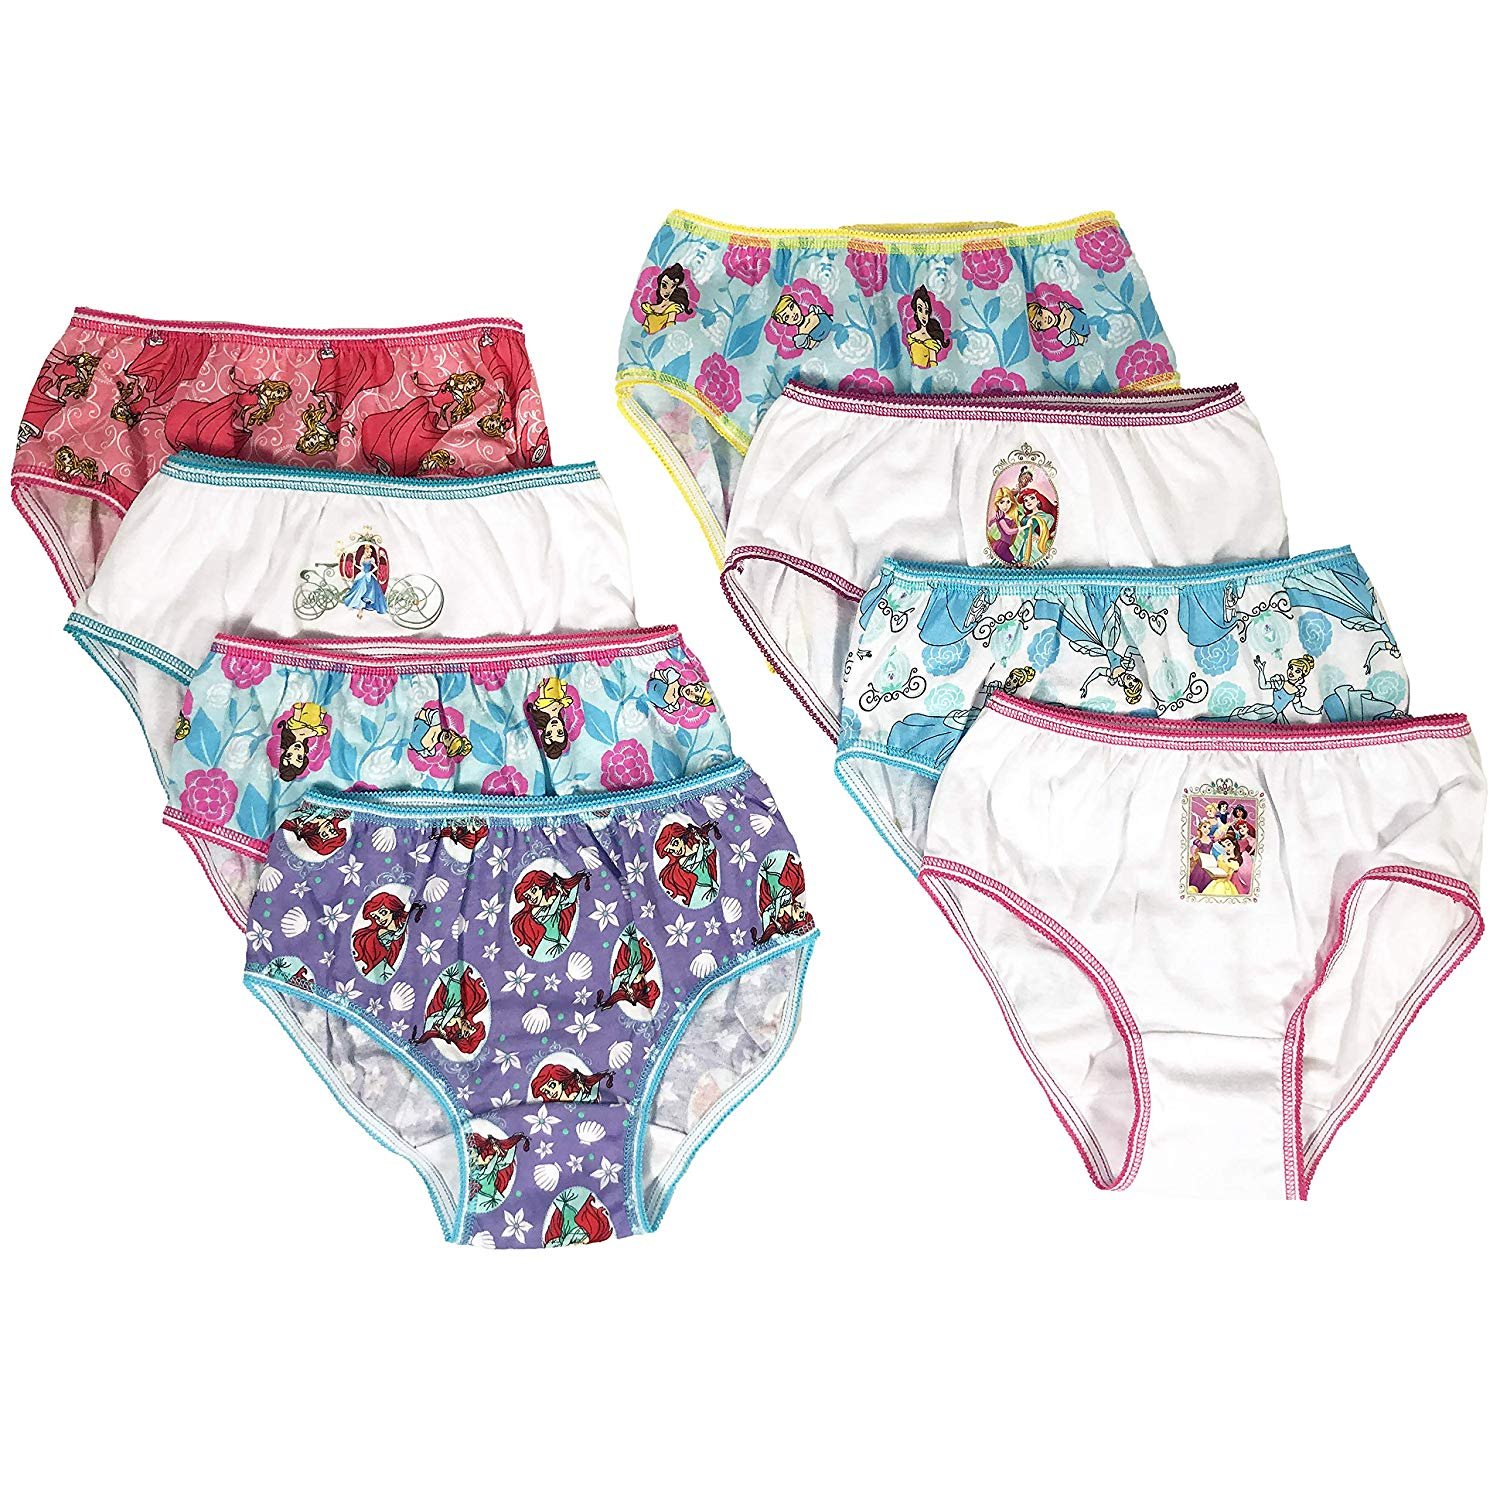 Princess Girls Panties 8-Pack Sizes 2T/3T, 4T, 4, 6, 8